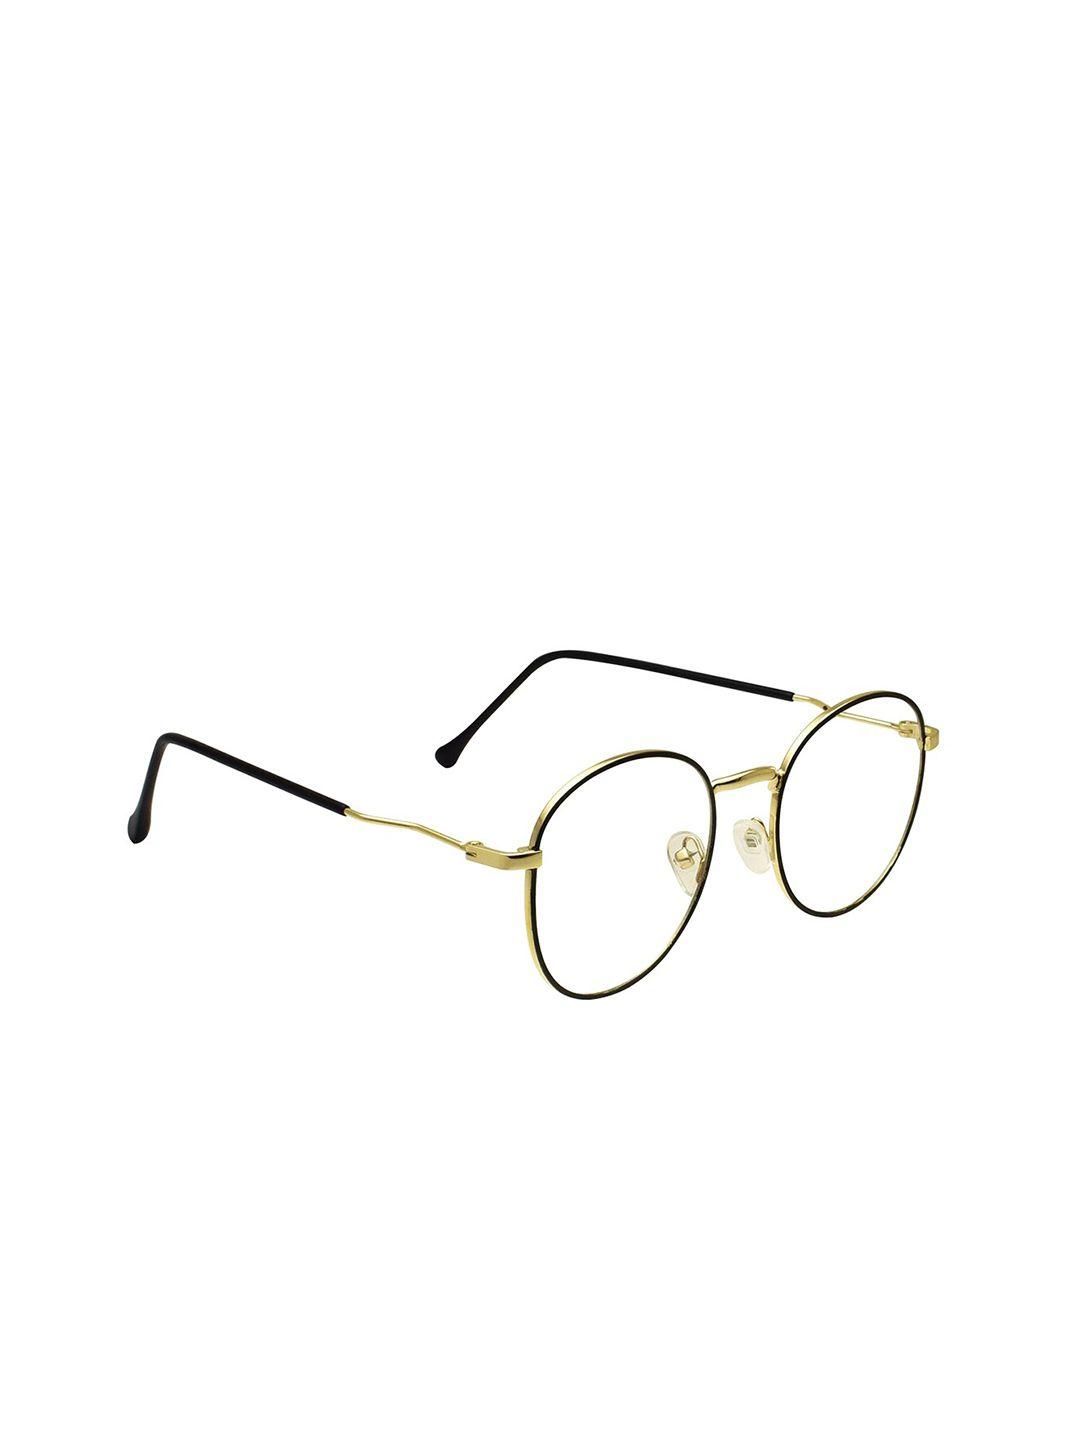 peter jones eyewear unisex black & gold-toned full rim round frames